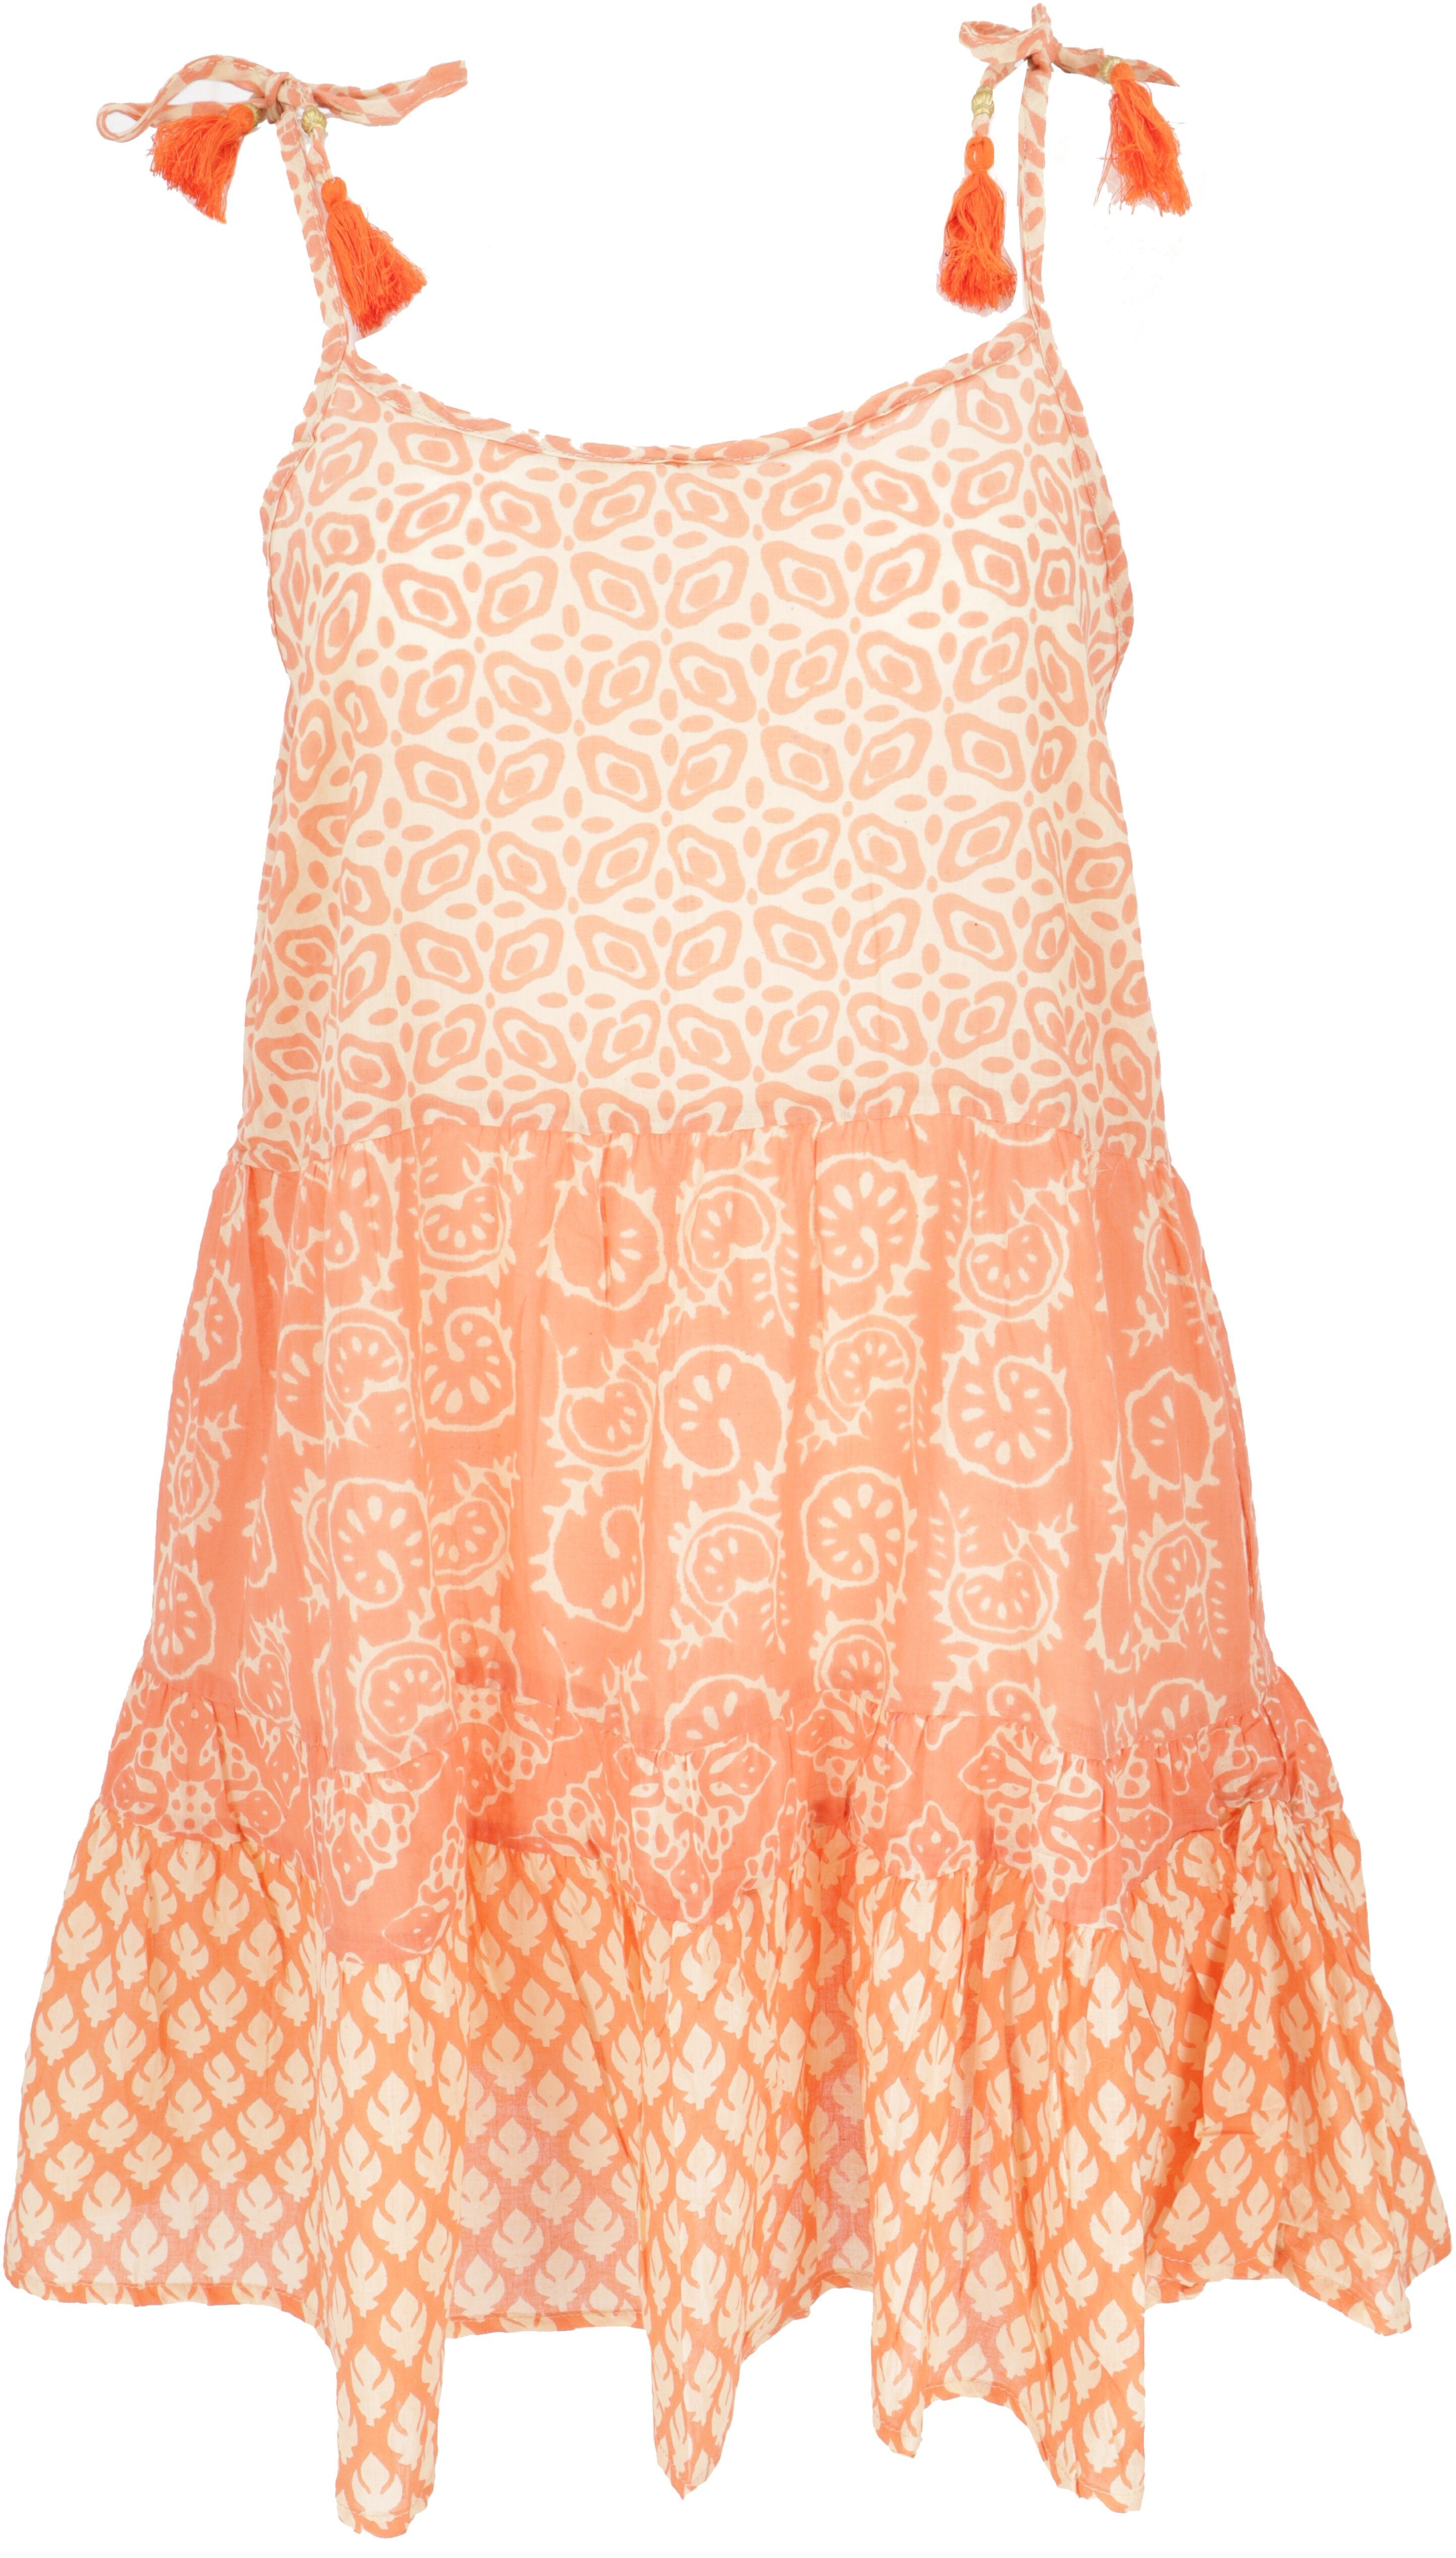 Guru-Shop Midikleid Boho Minikleid, luftiges Stufenkleid aus.. alternative Bekleidung apricot